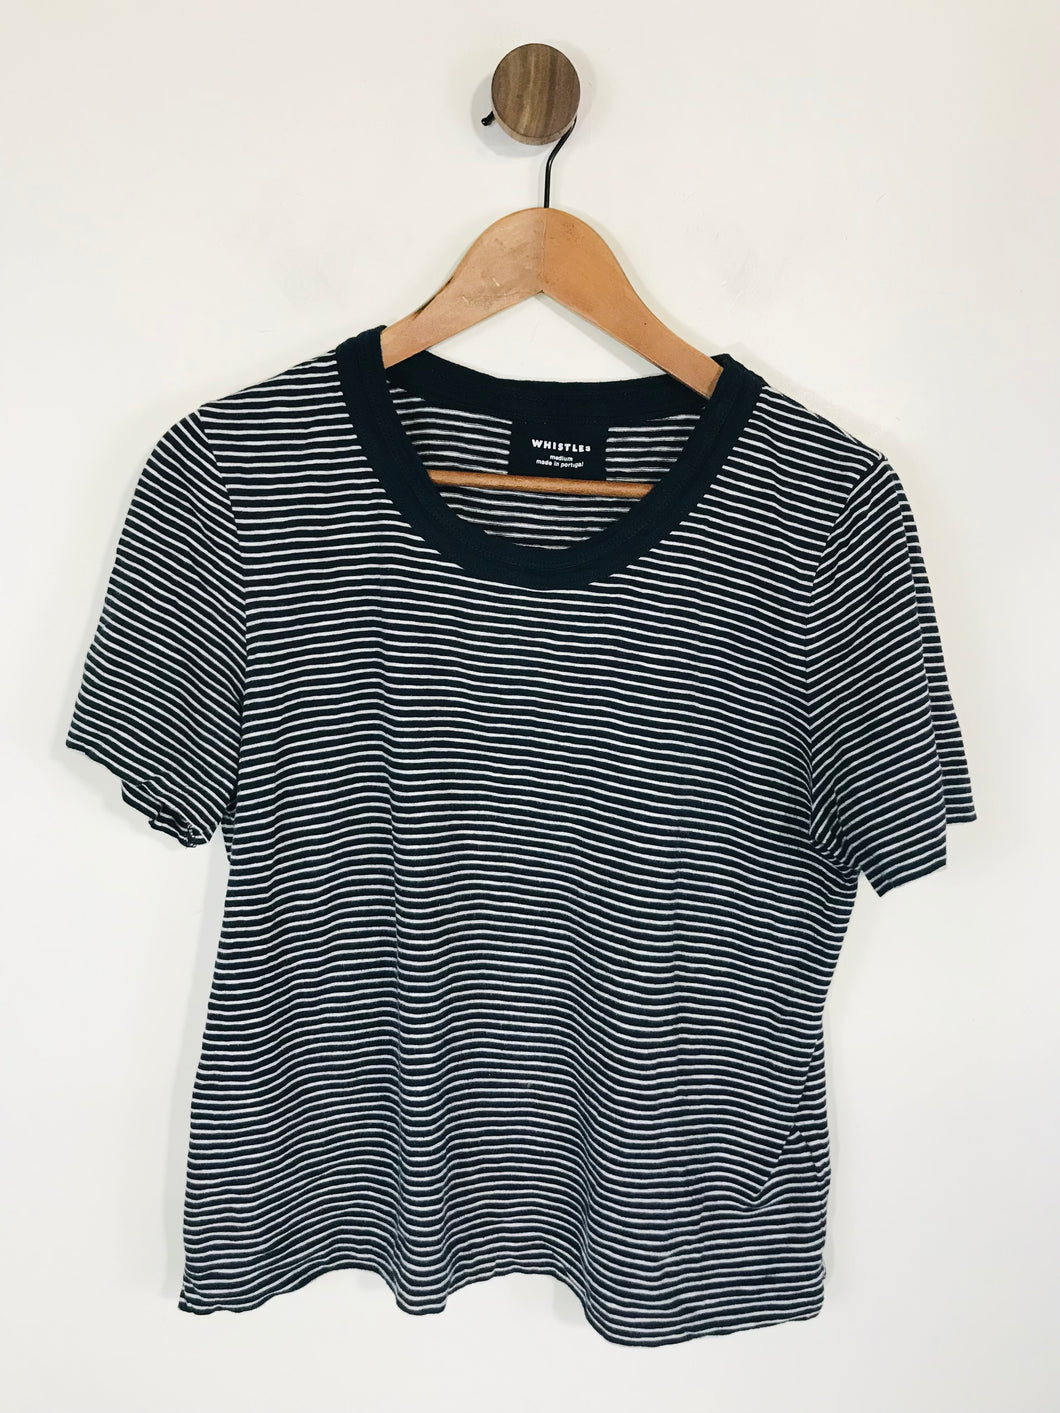 Whistles Women's Striped T-Shirt | M UK10-12 | Blue